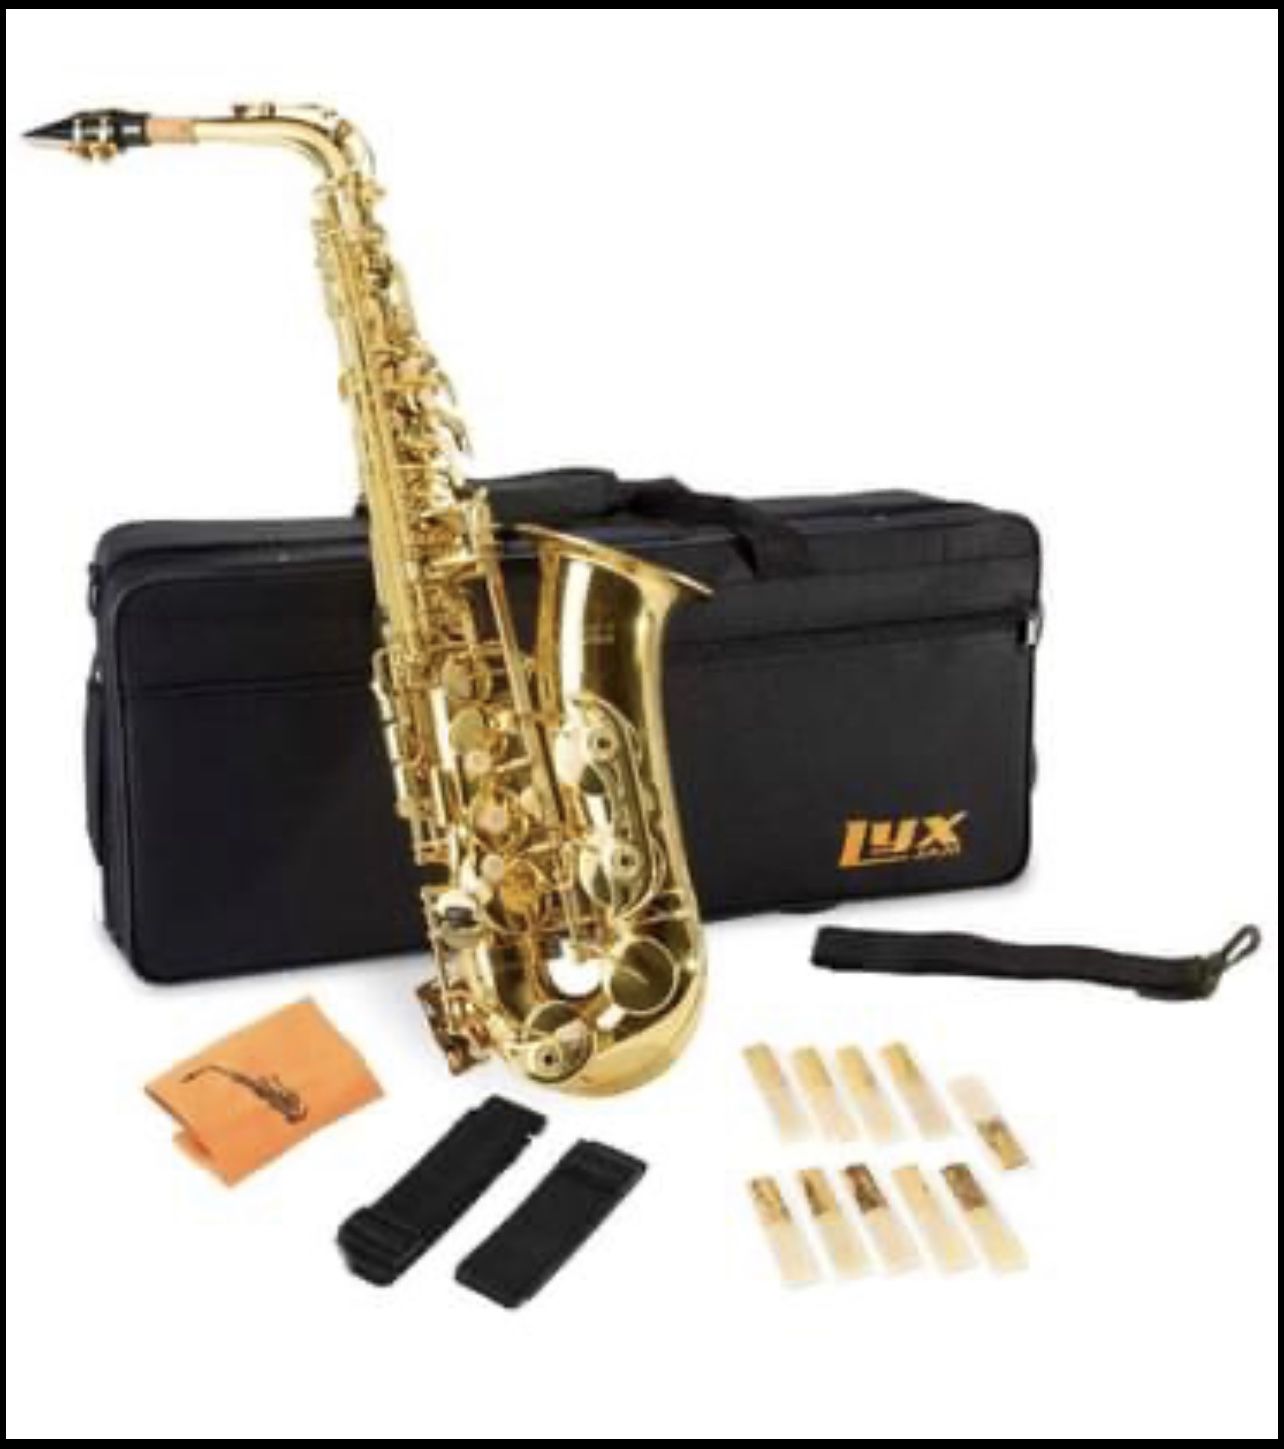 LyxJam Alto Saxophone E Flat Brass Sax Beginners Kit, With Carry Case